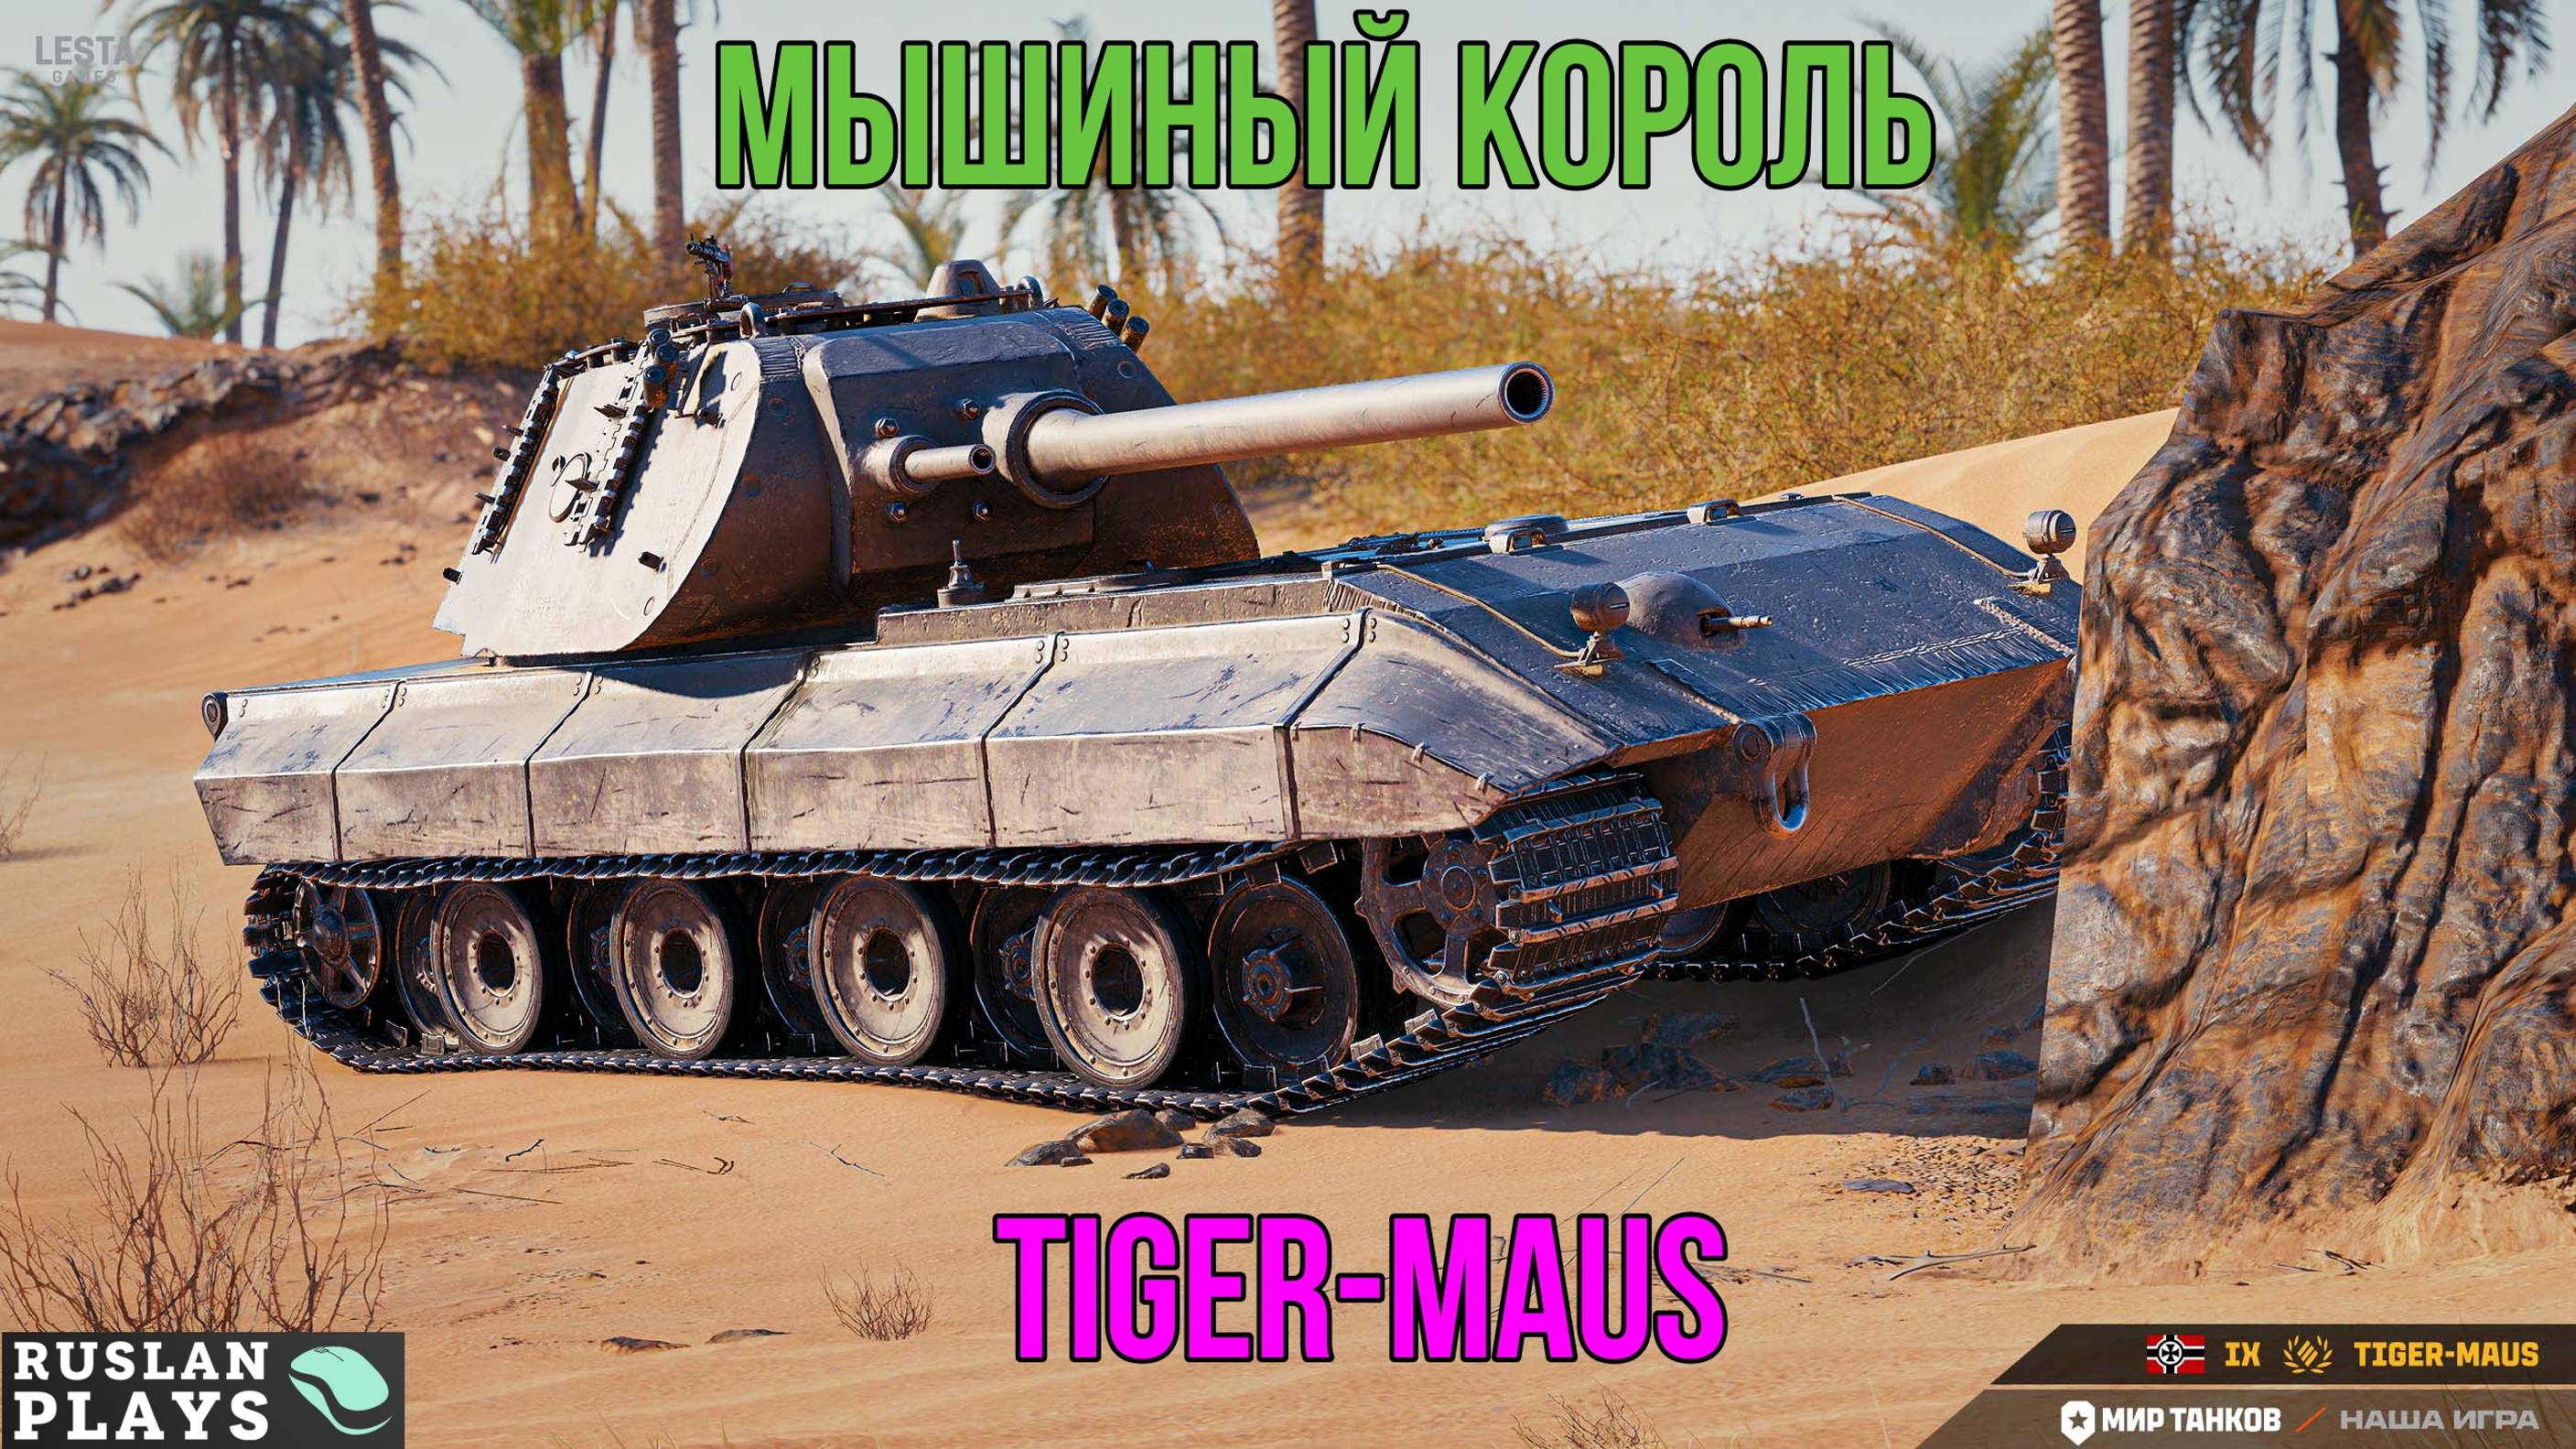 ПРОБУЕМ НОВИНКУ ЗА ЖЕТОНЫ 🔥 Tiger-Maus